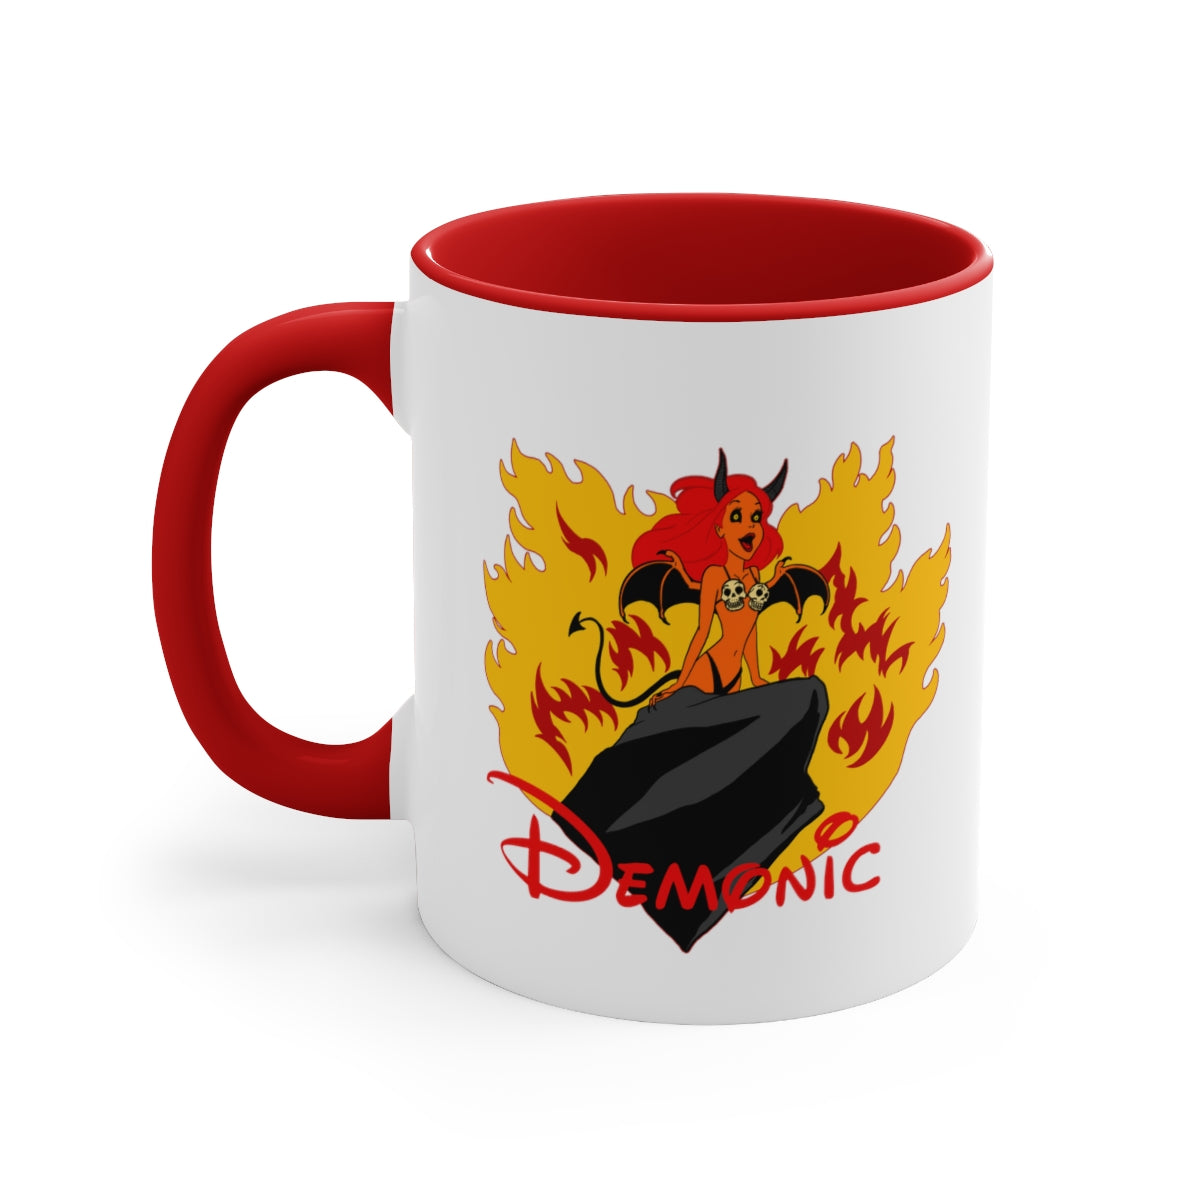 Demonic Mug